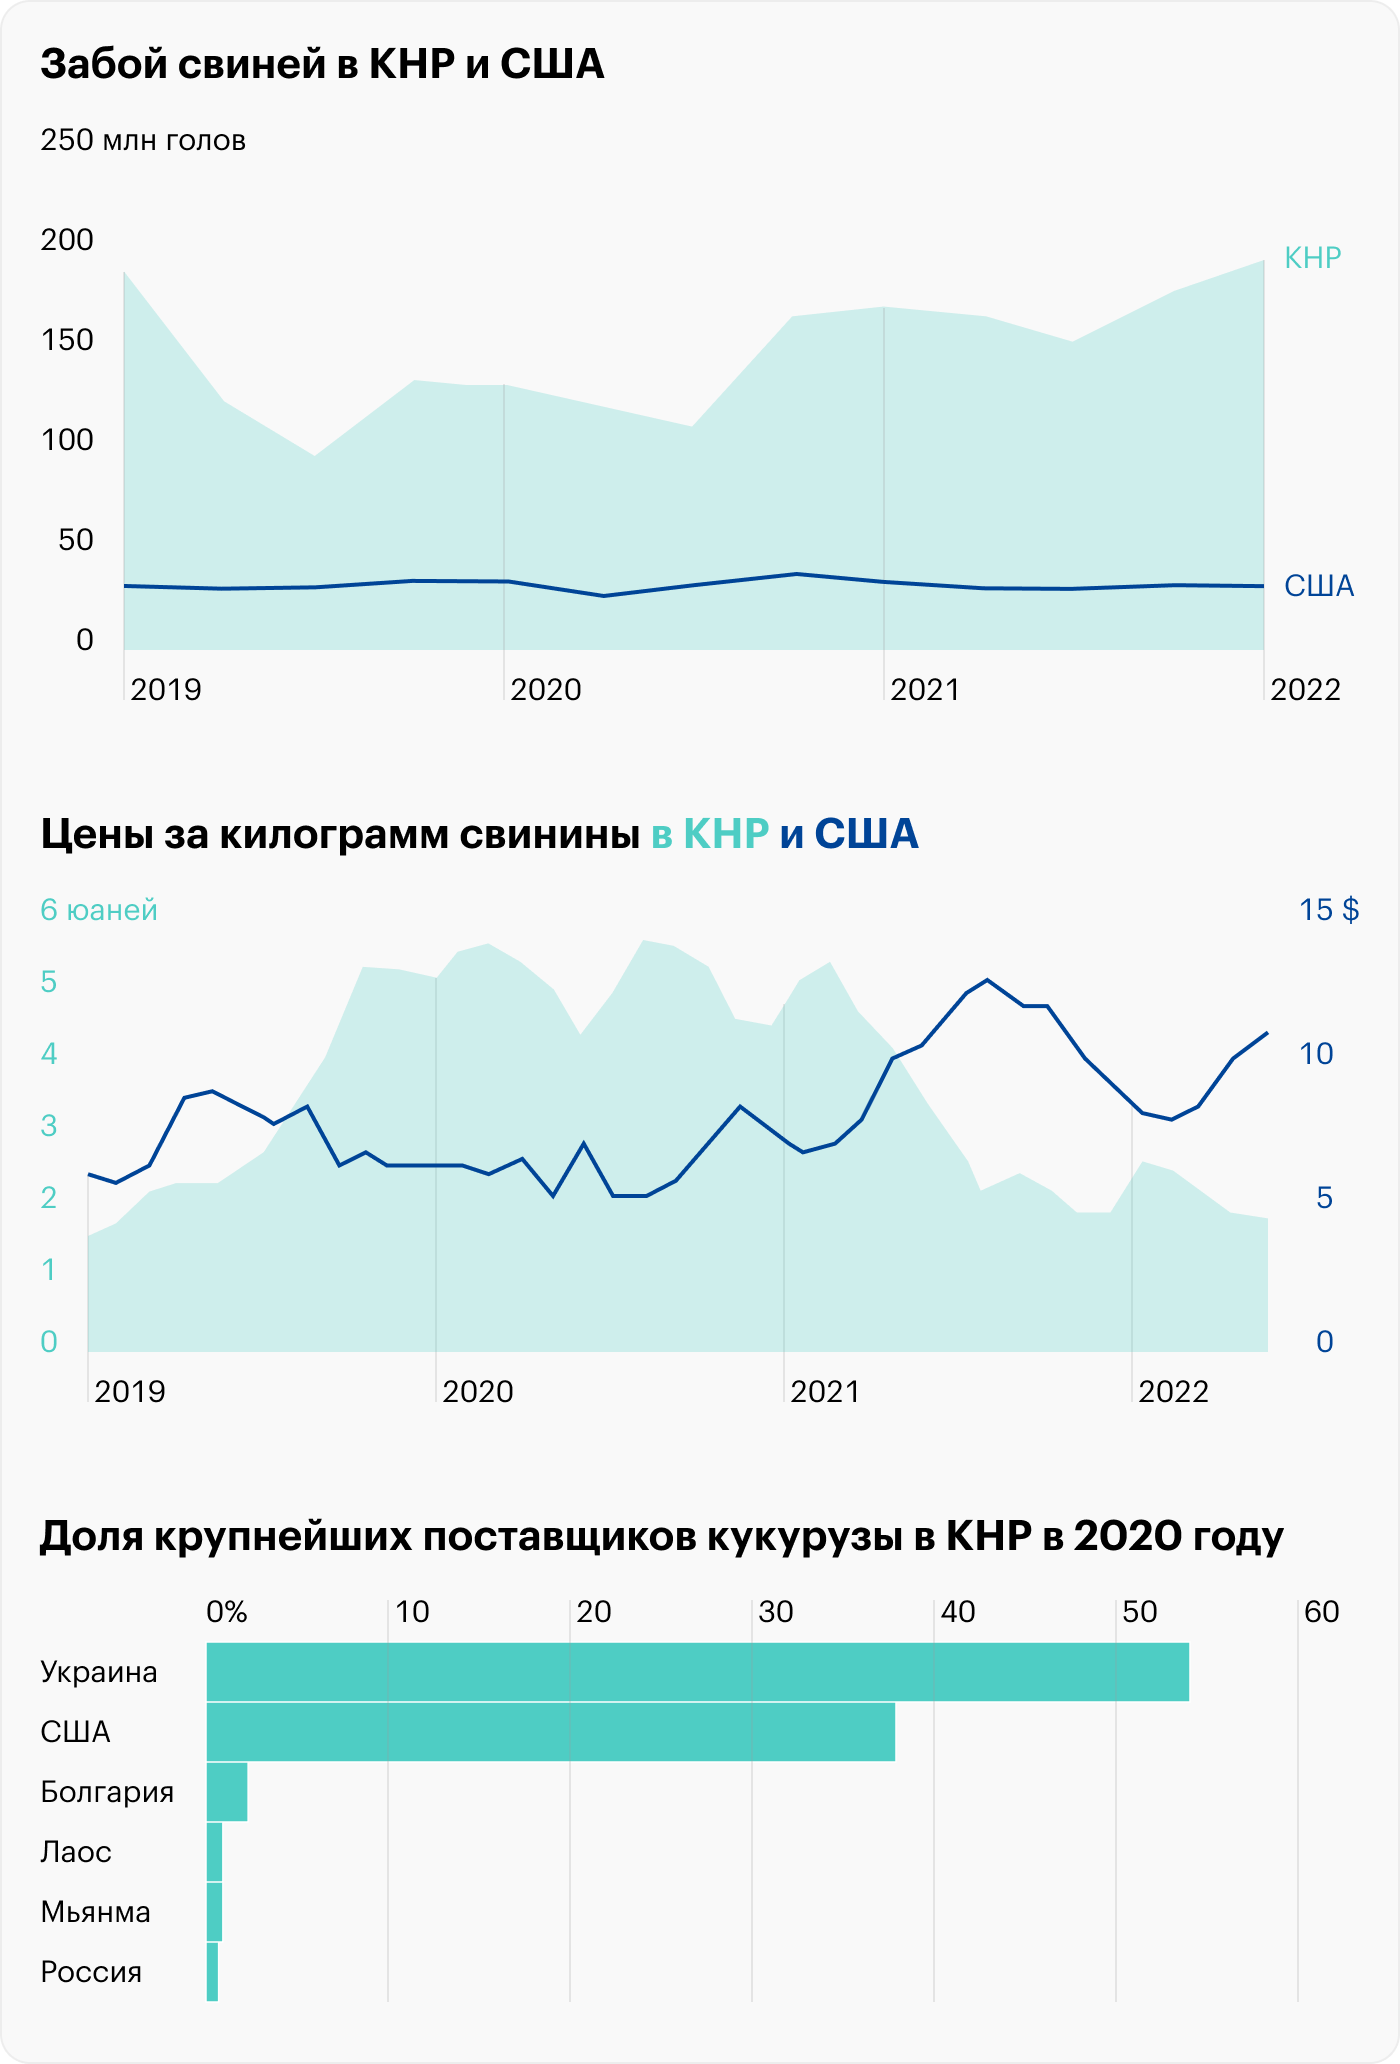 Источник: презентация WH Group, слайд 5 (6), Daily Shot, Ukraine accounts for a large share of corn imports